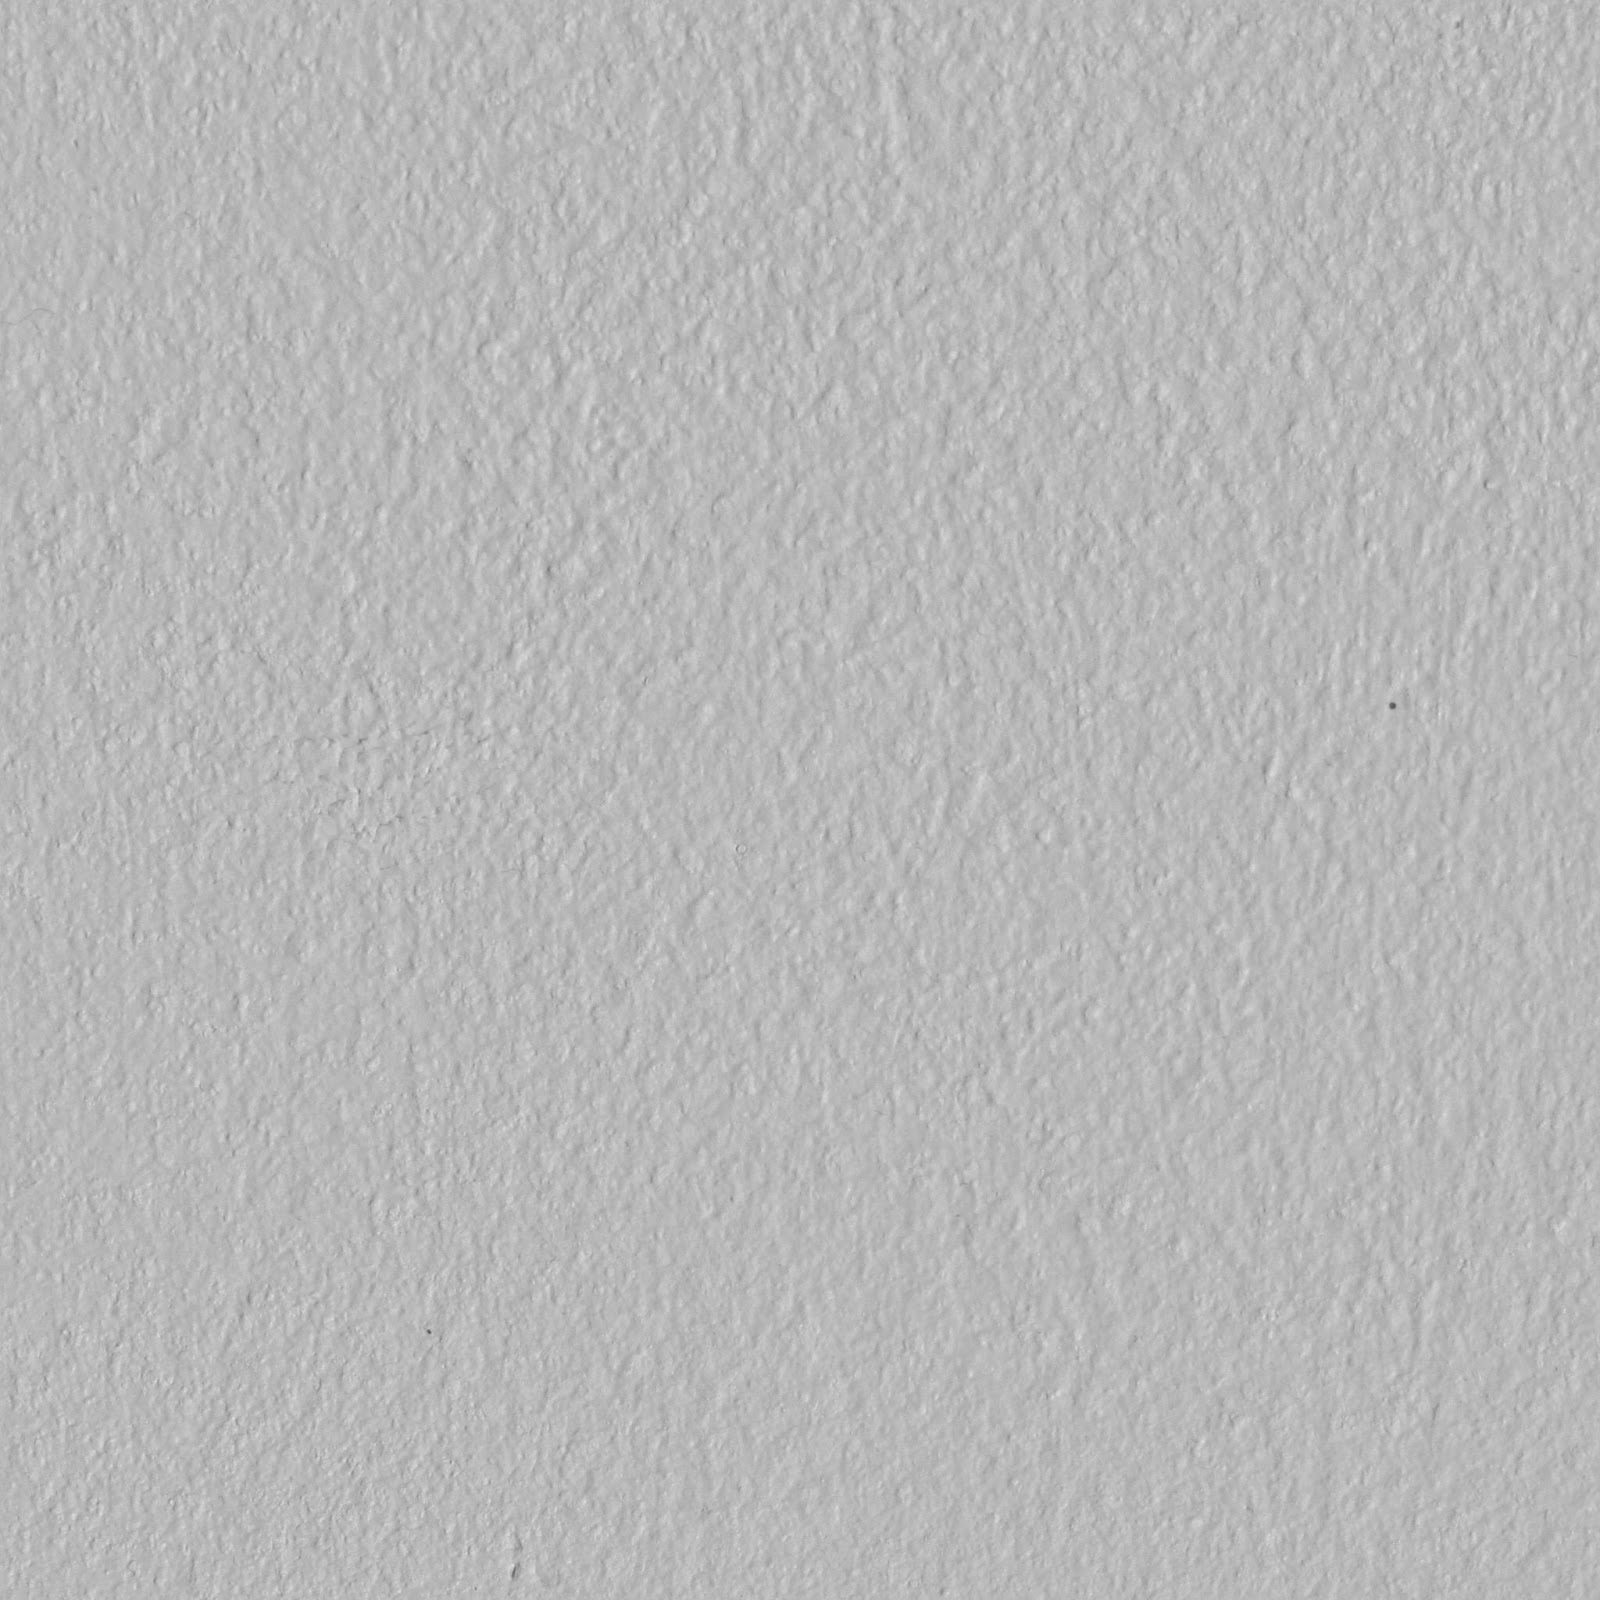 High Resolution Seamless Textures: Free Seamless Stucco Wall Plaster ...